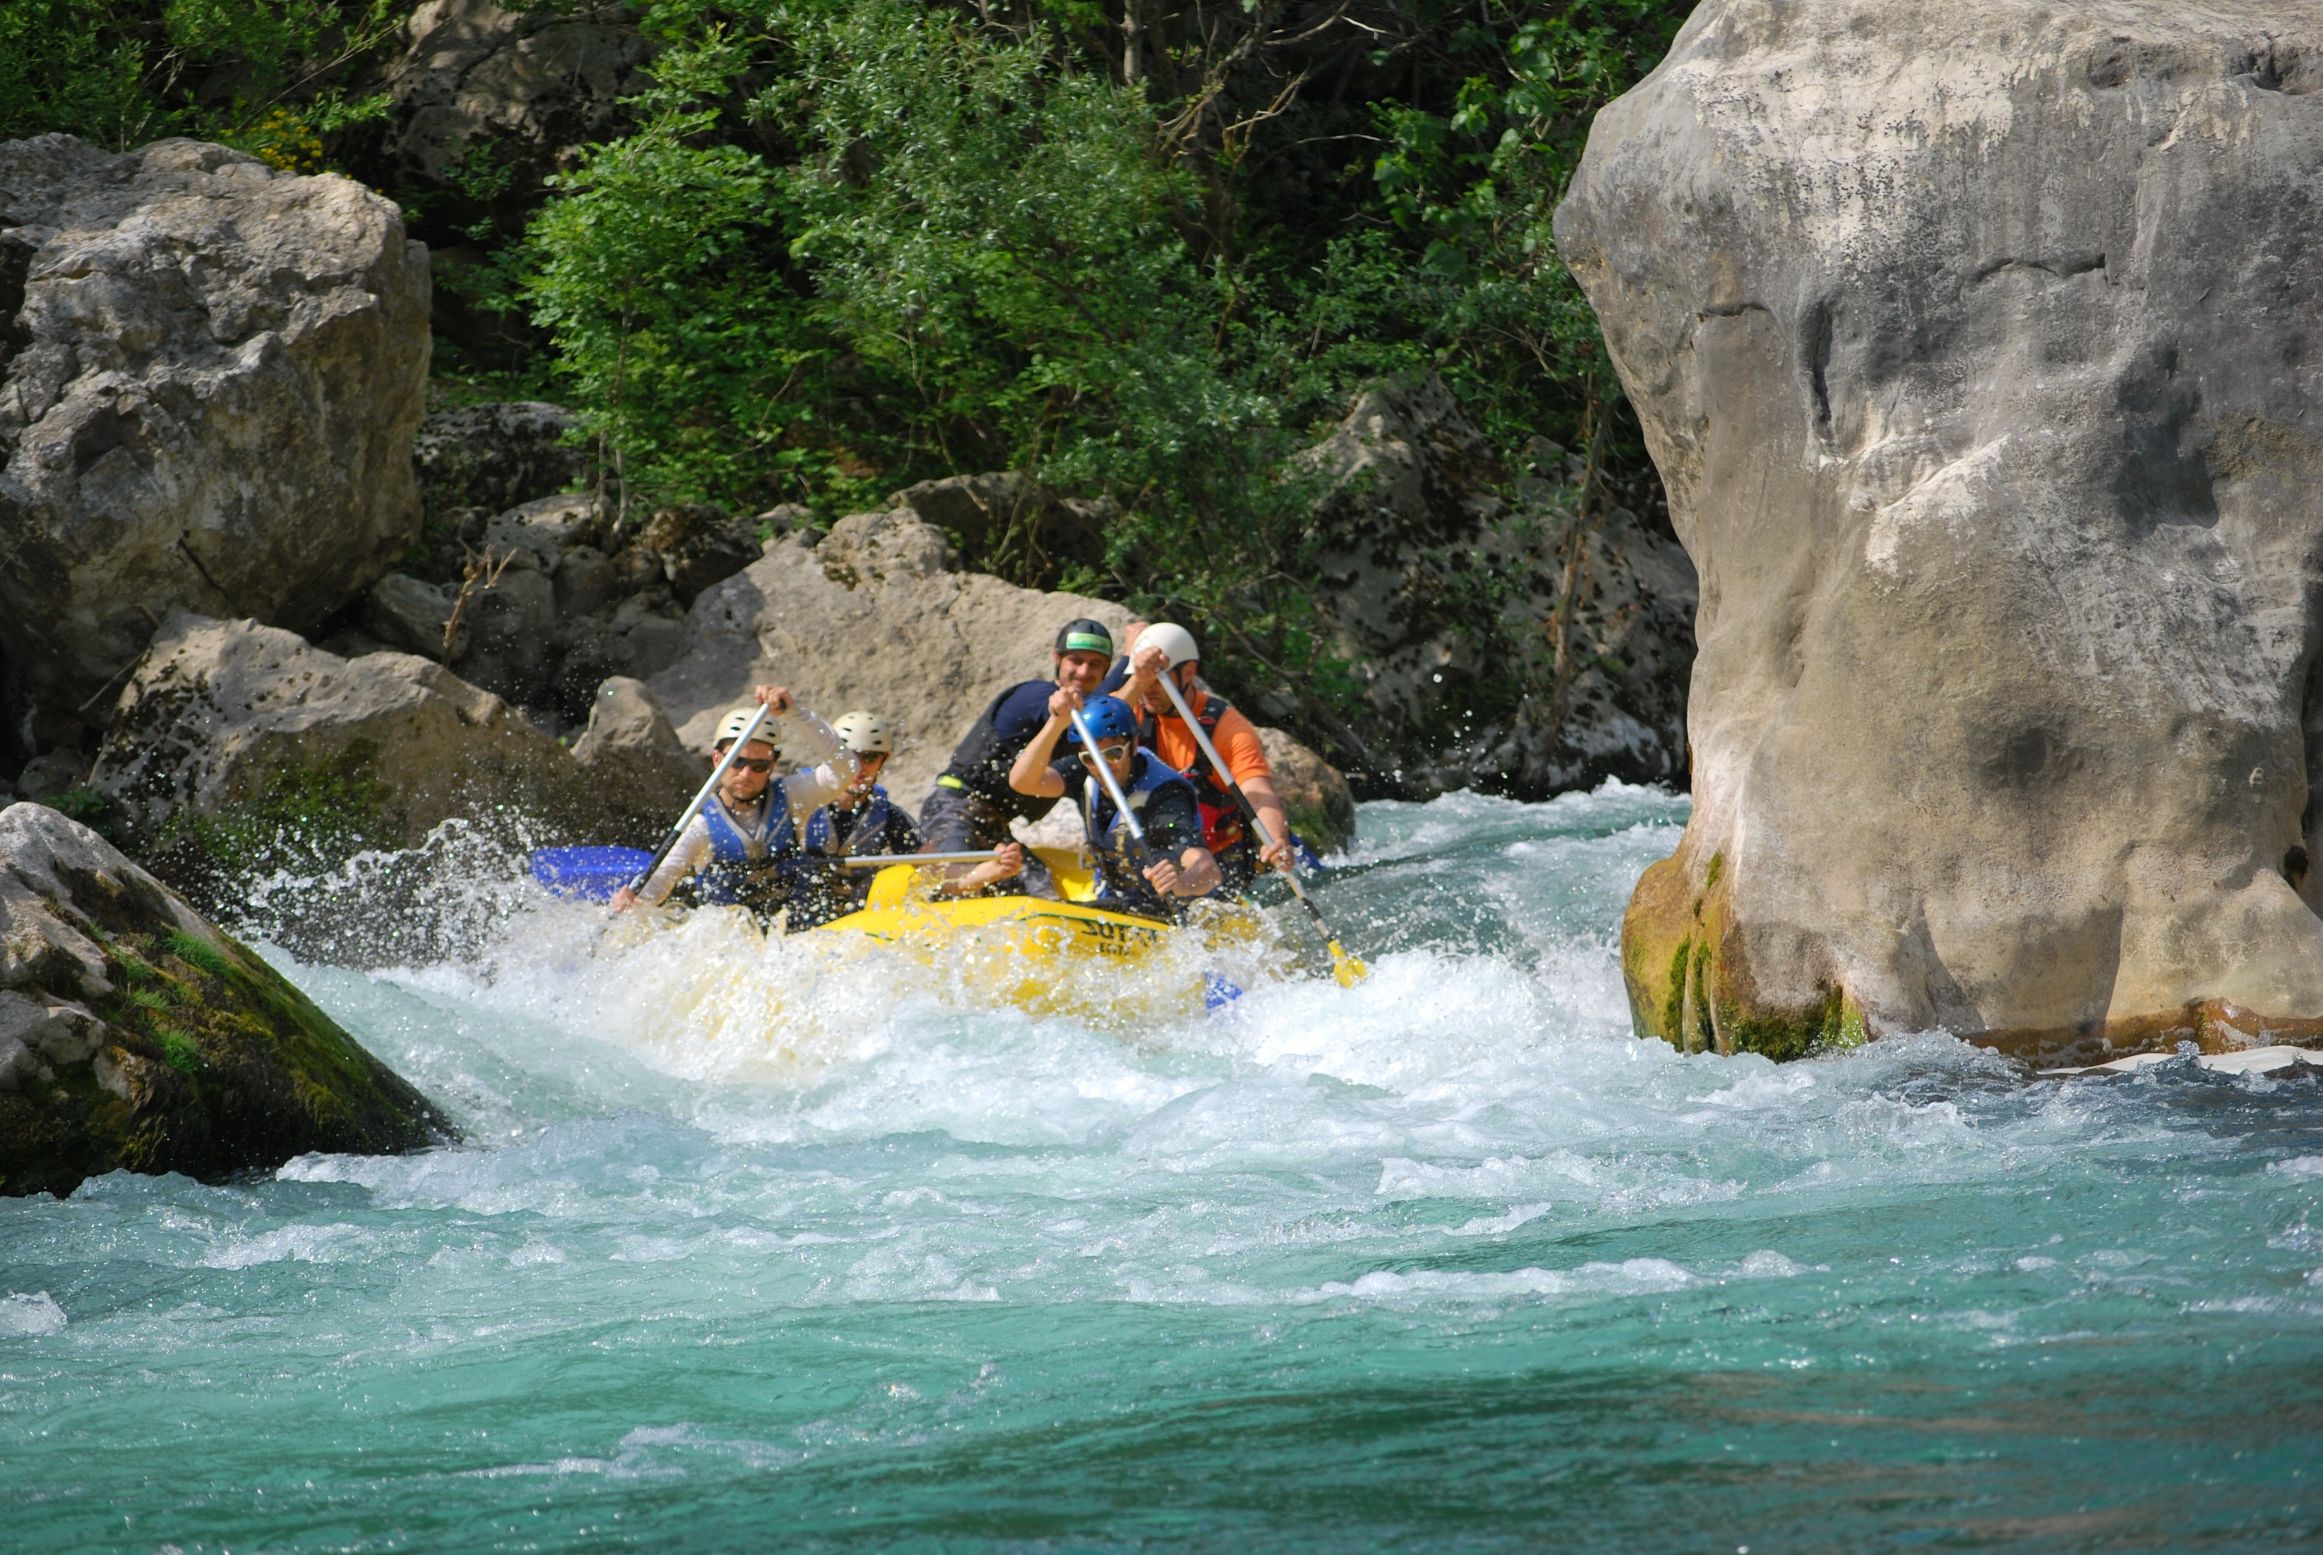 Rafting in the Cetina River on the Dalmatian Coast in Croatia